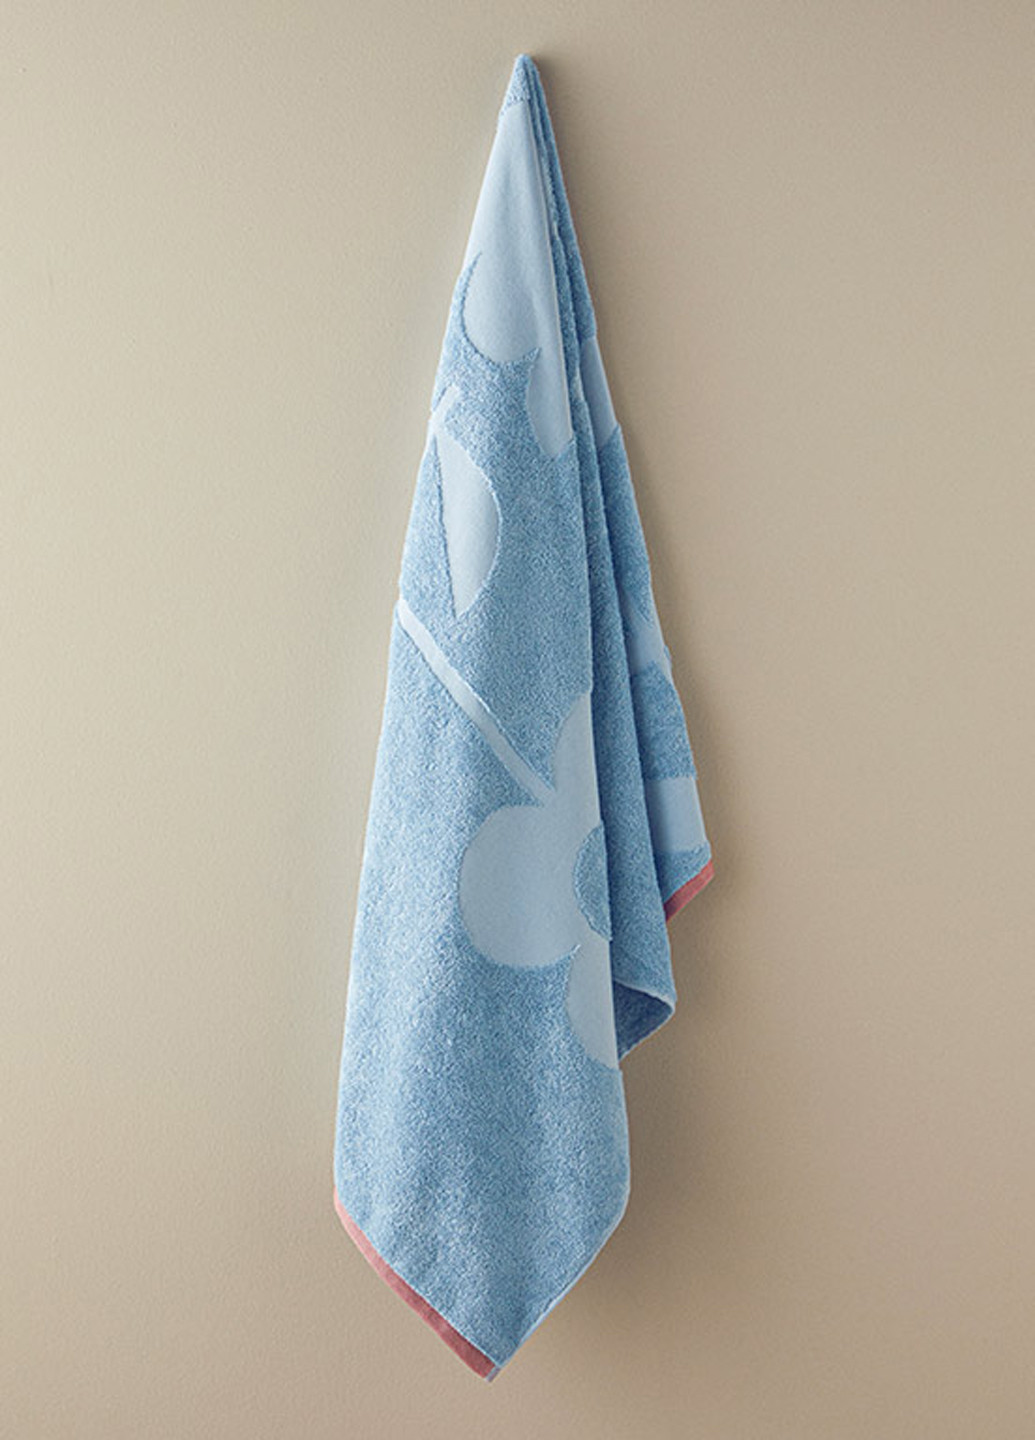 English Home полотенце, 70х140 см цветочный голубой производство - Турция